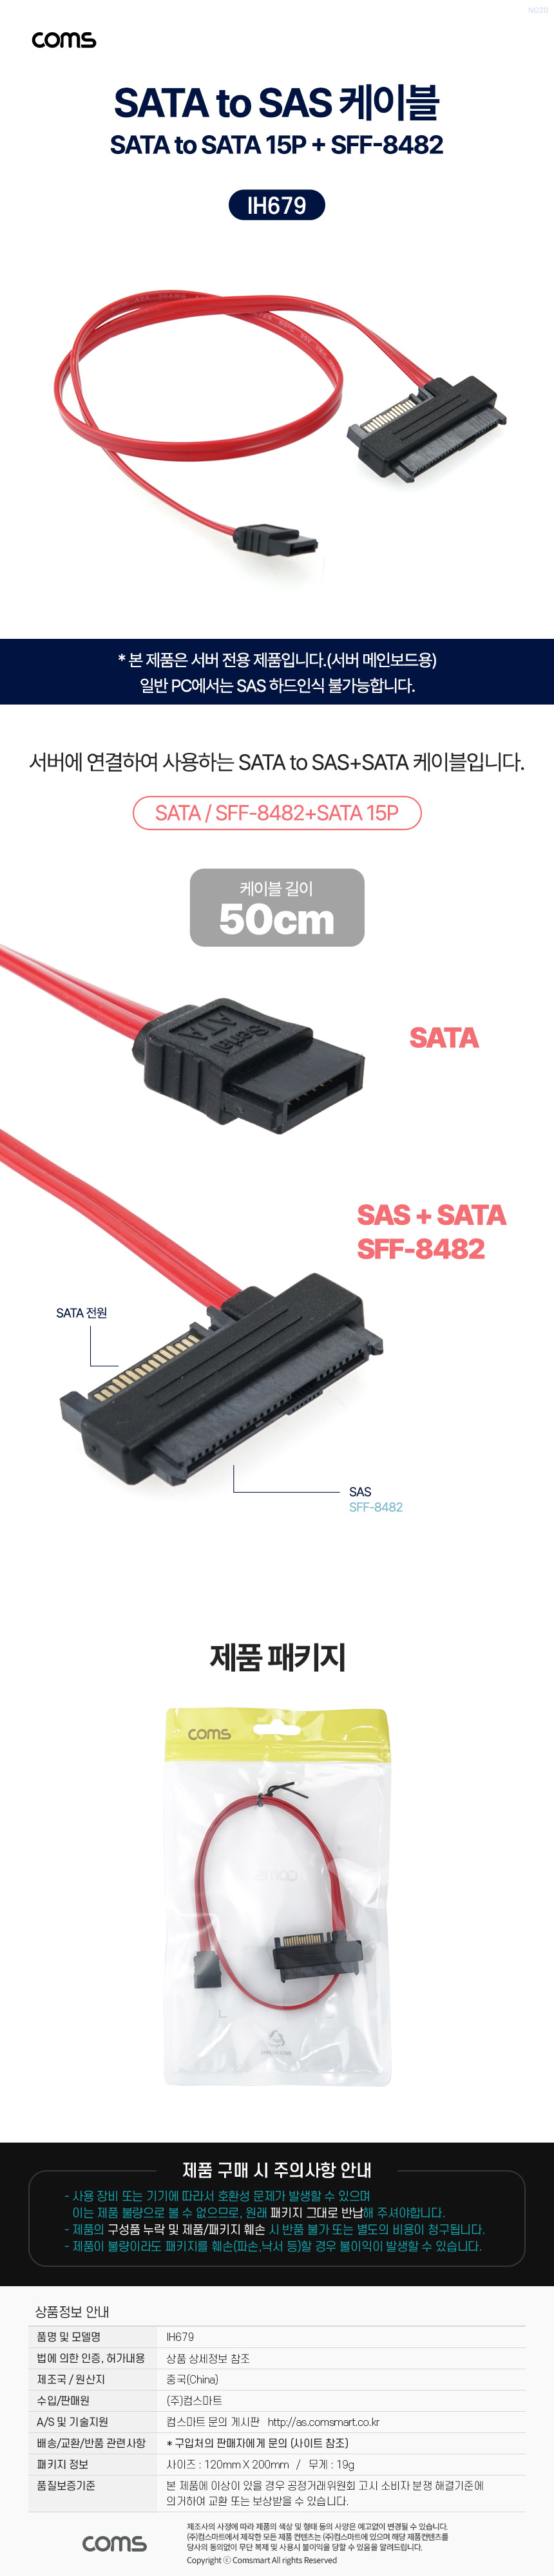 SATA SAS 케이블 SFF-8482 서버 메인보드